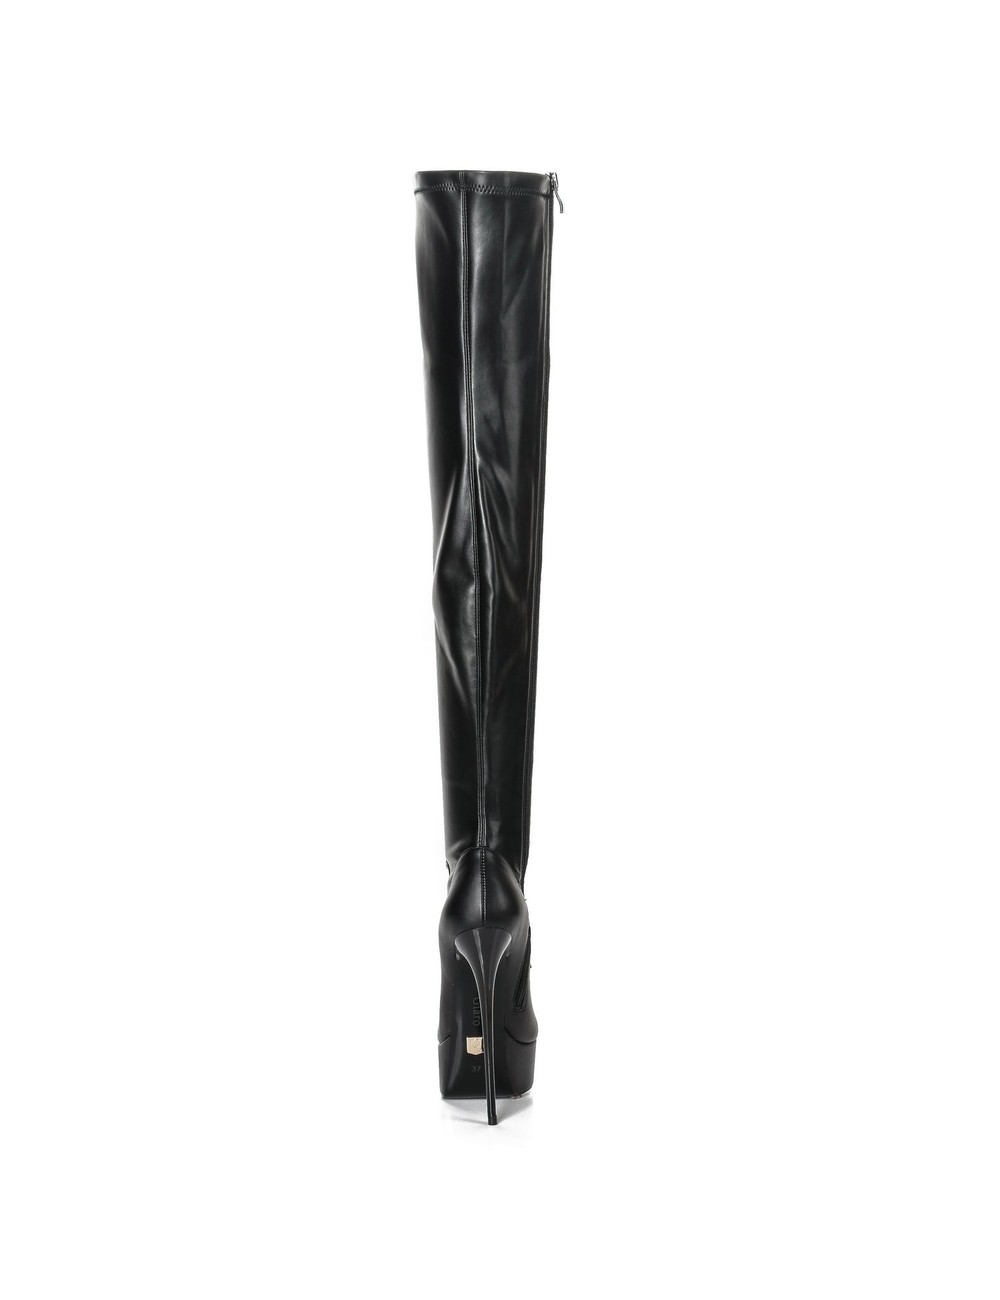 Giaro Black Lace-up Giaro "DOMINIQUE" thigh boots